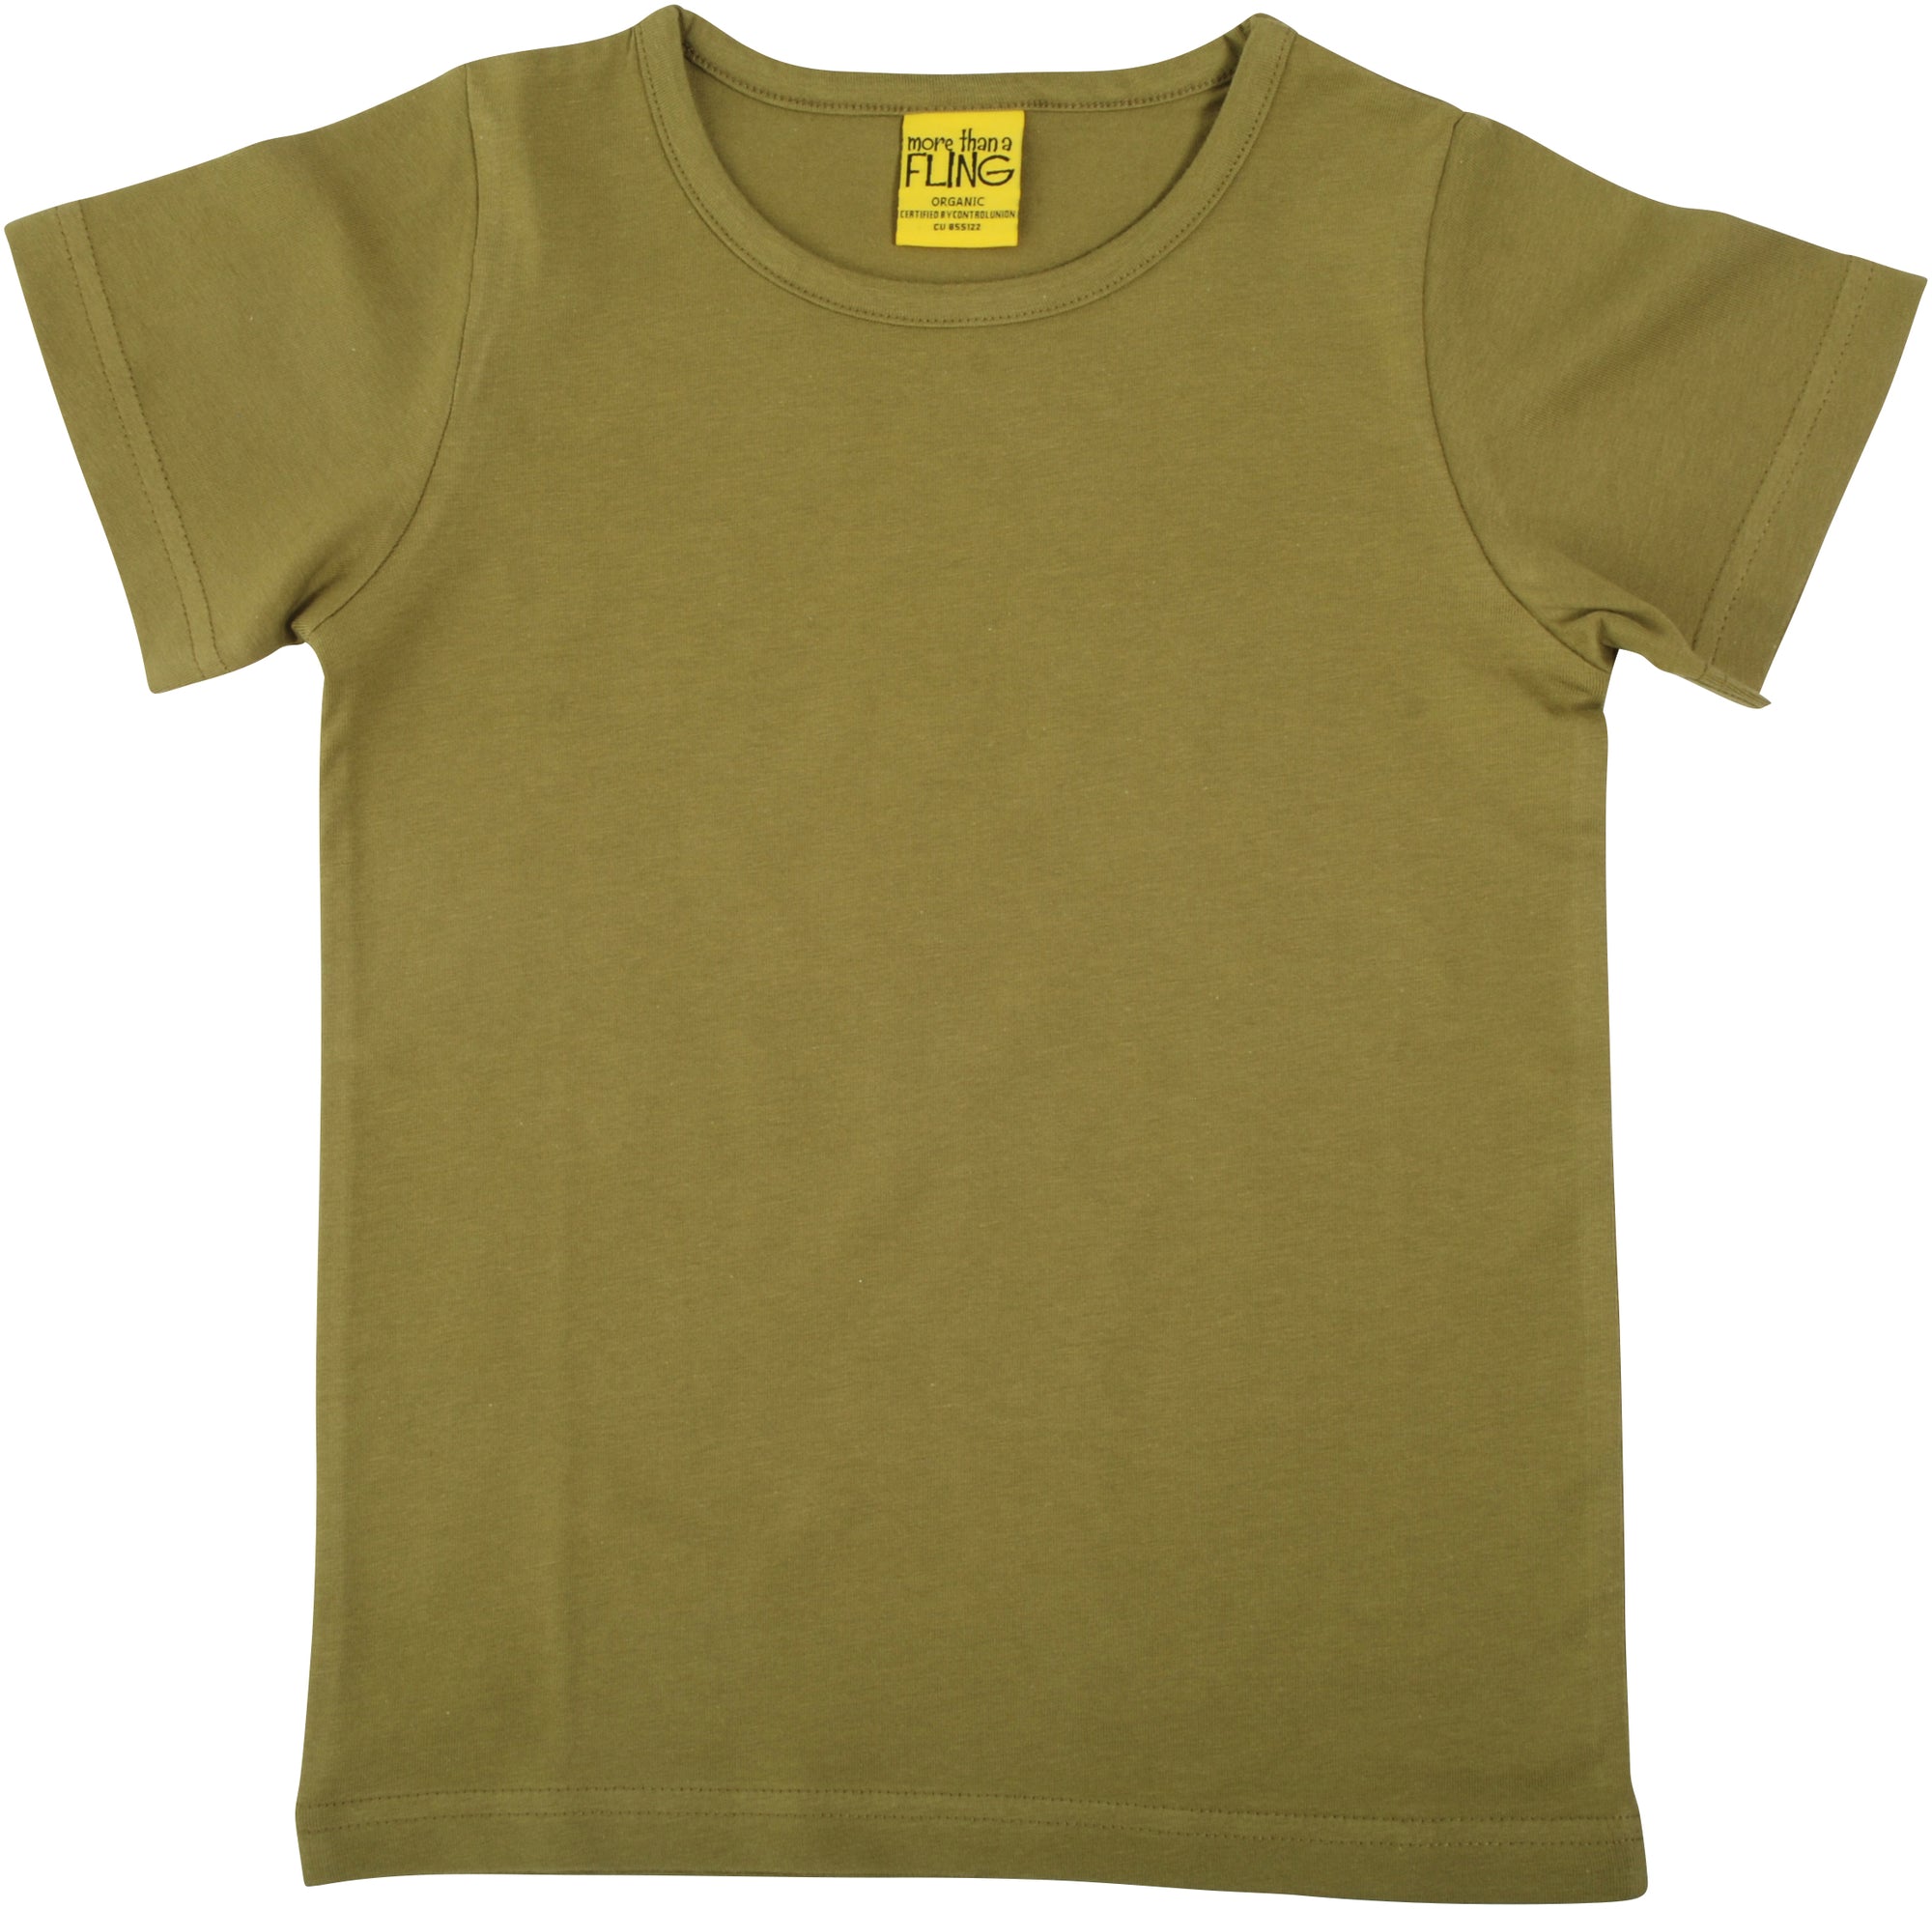 More Than A Fling ADULT - T-Shirt Sage Green